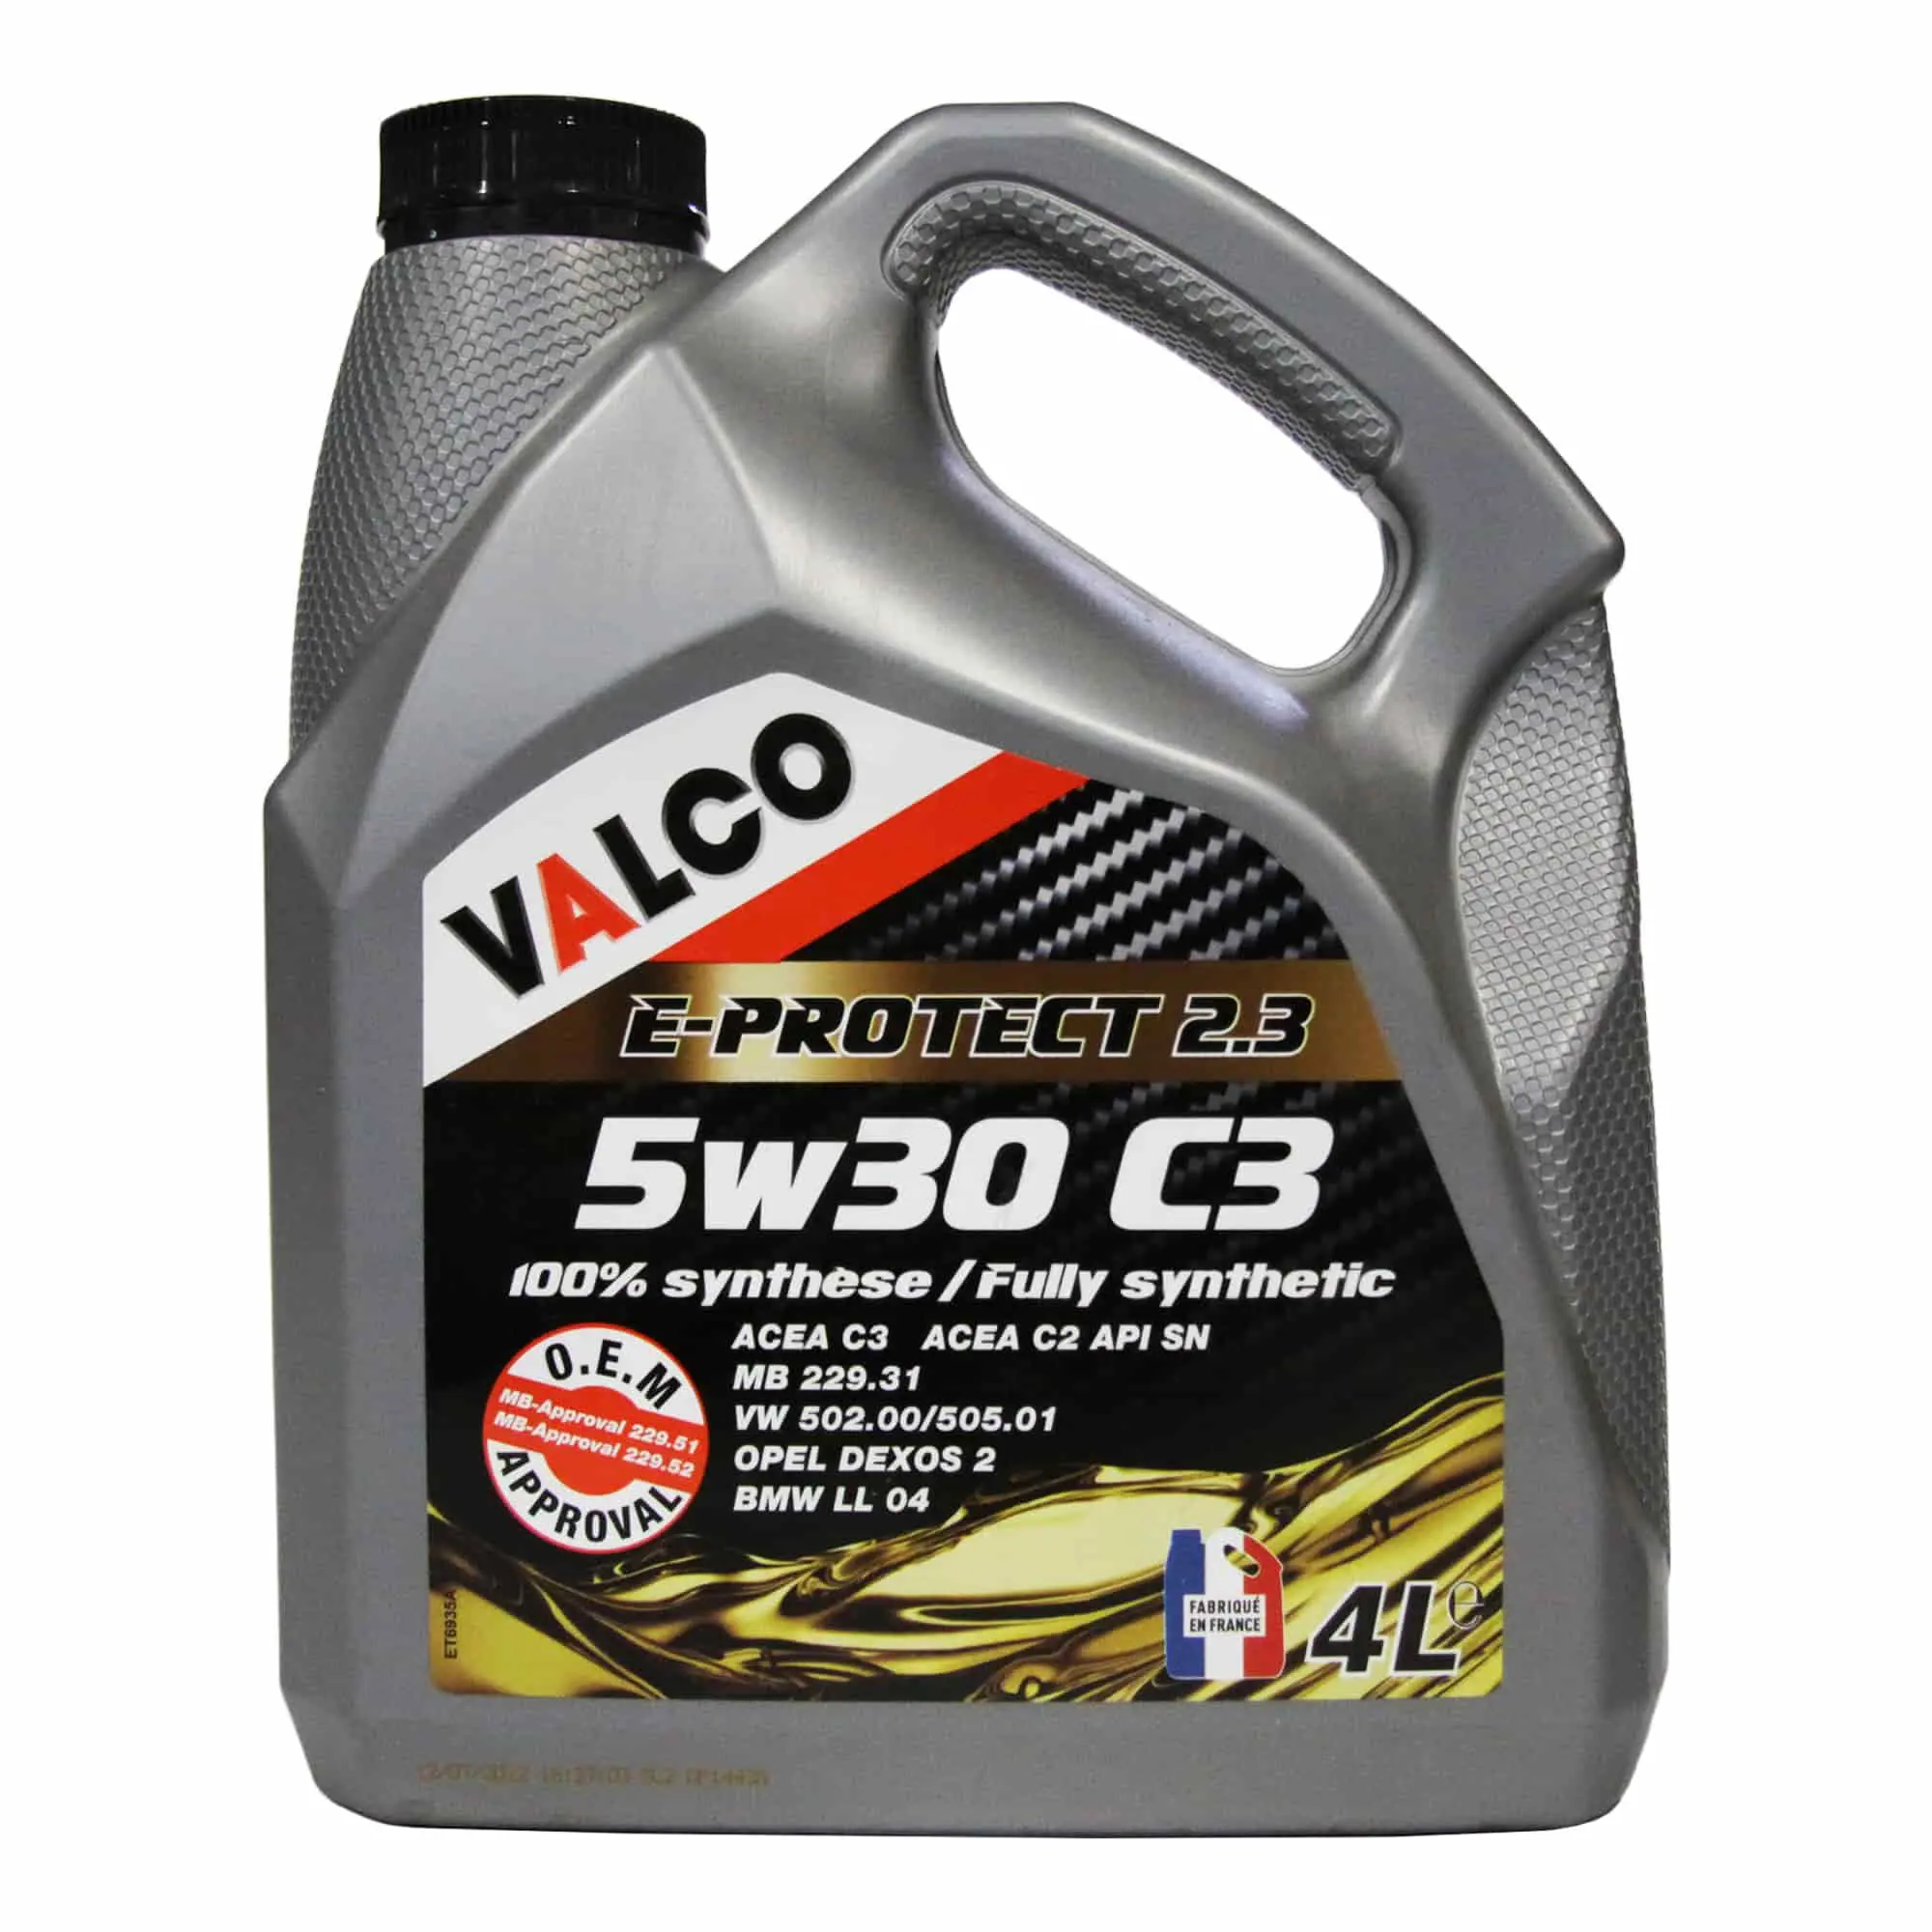 Моторное масло Valco E-Protect 2.3 5W-30 4л (PF006867)